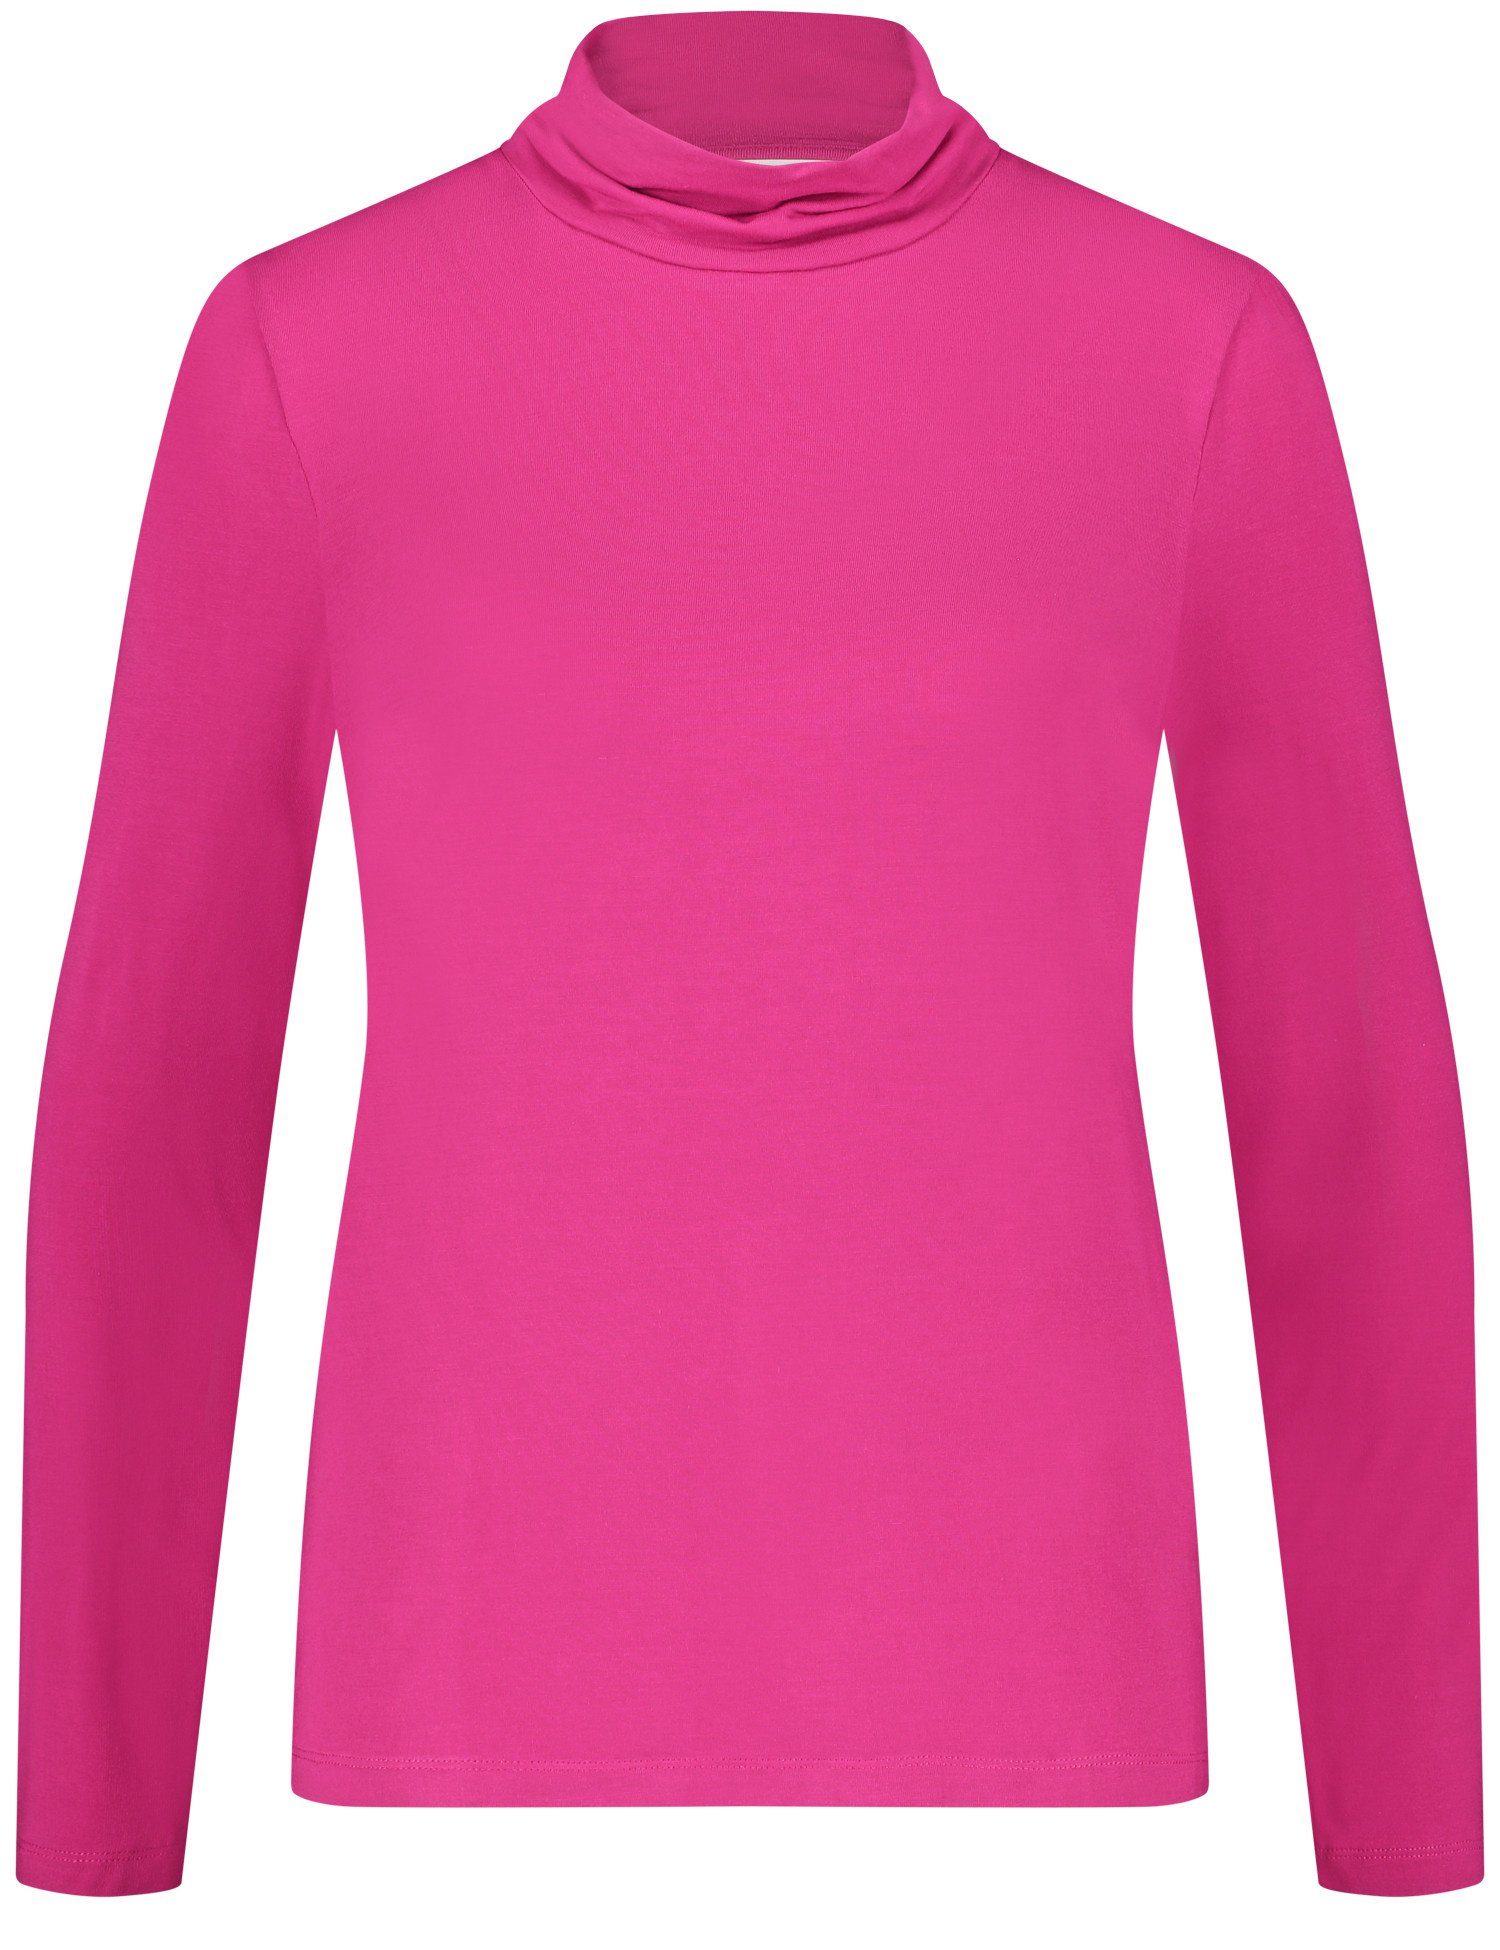 GERRY WEBER Longsleeve Langarmshirt Mit Faltenturtle hot pink | 